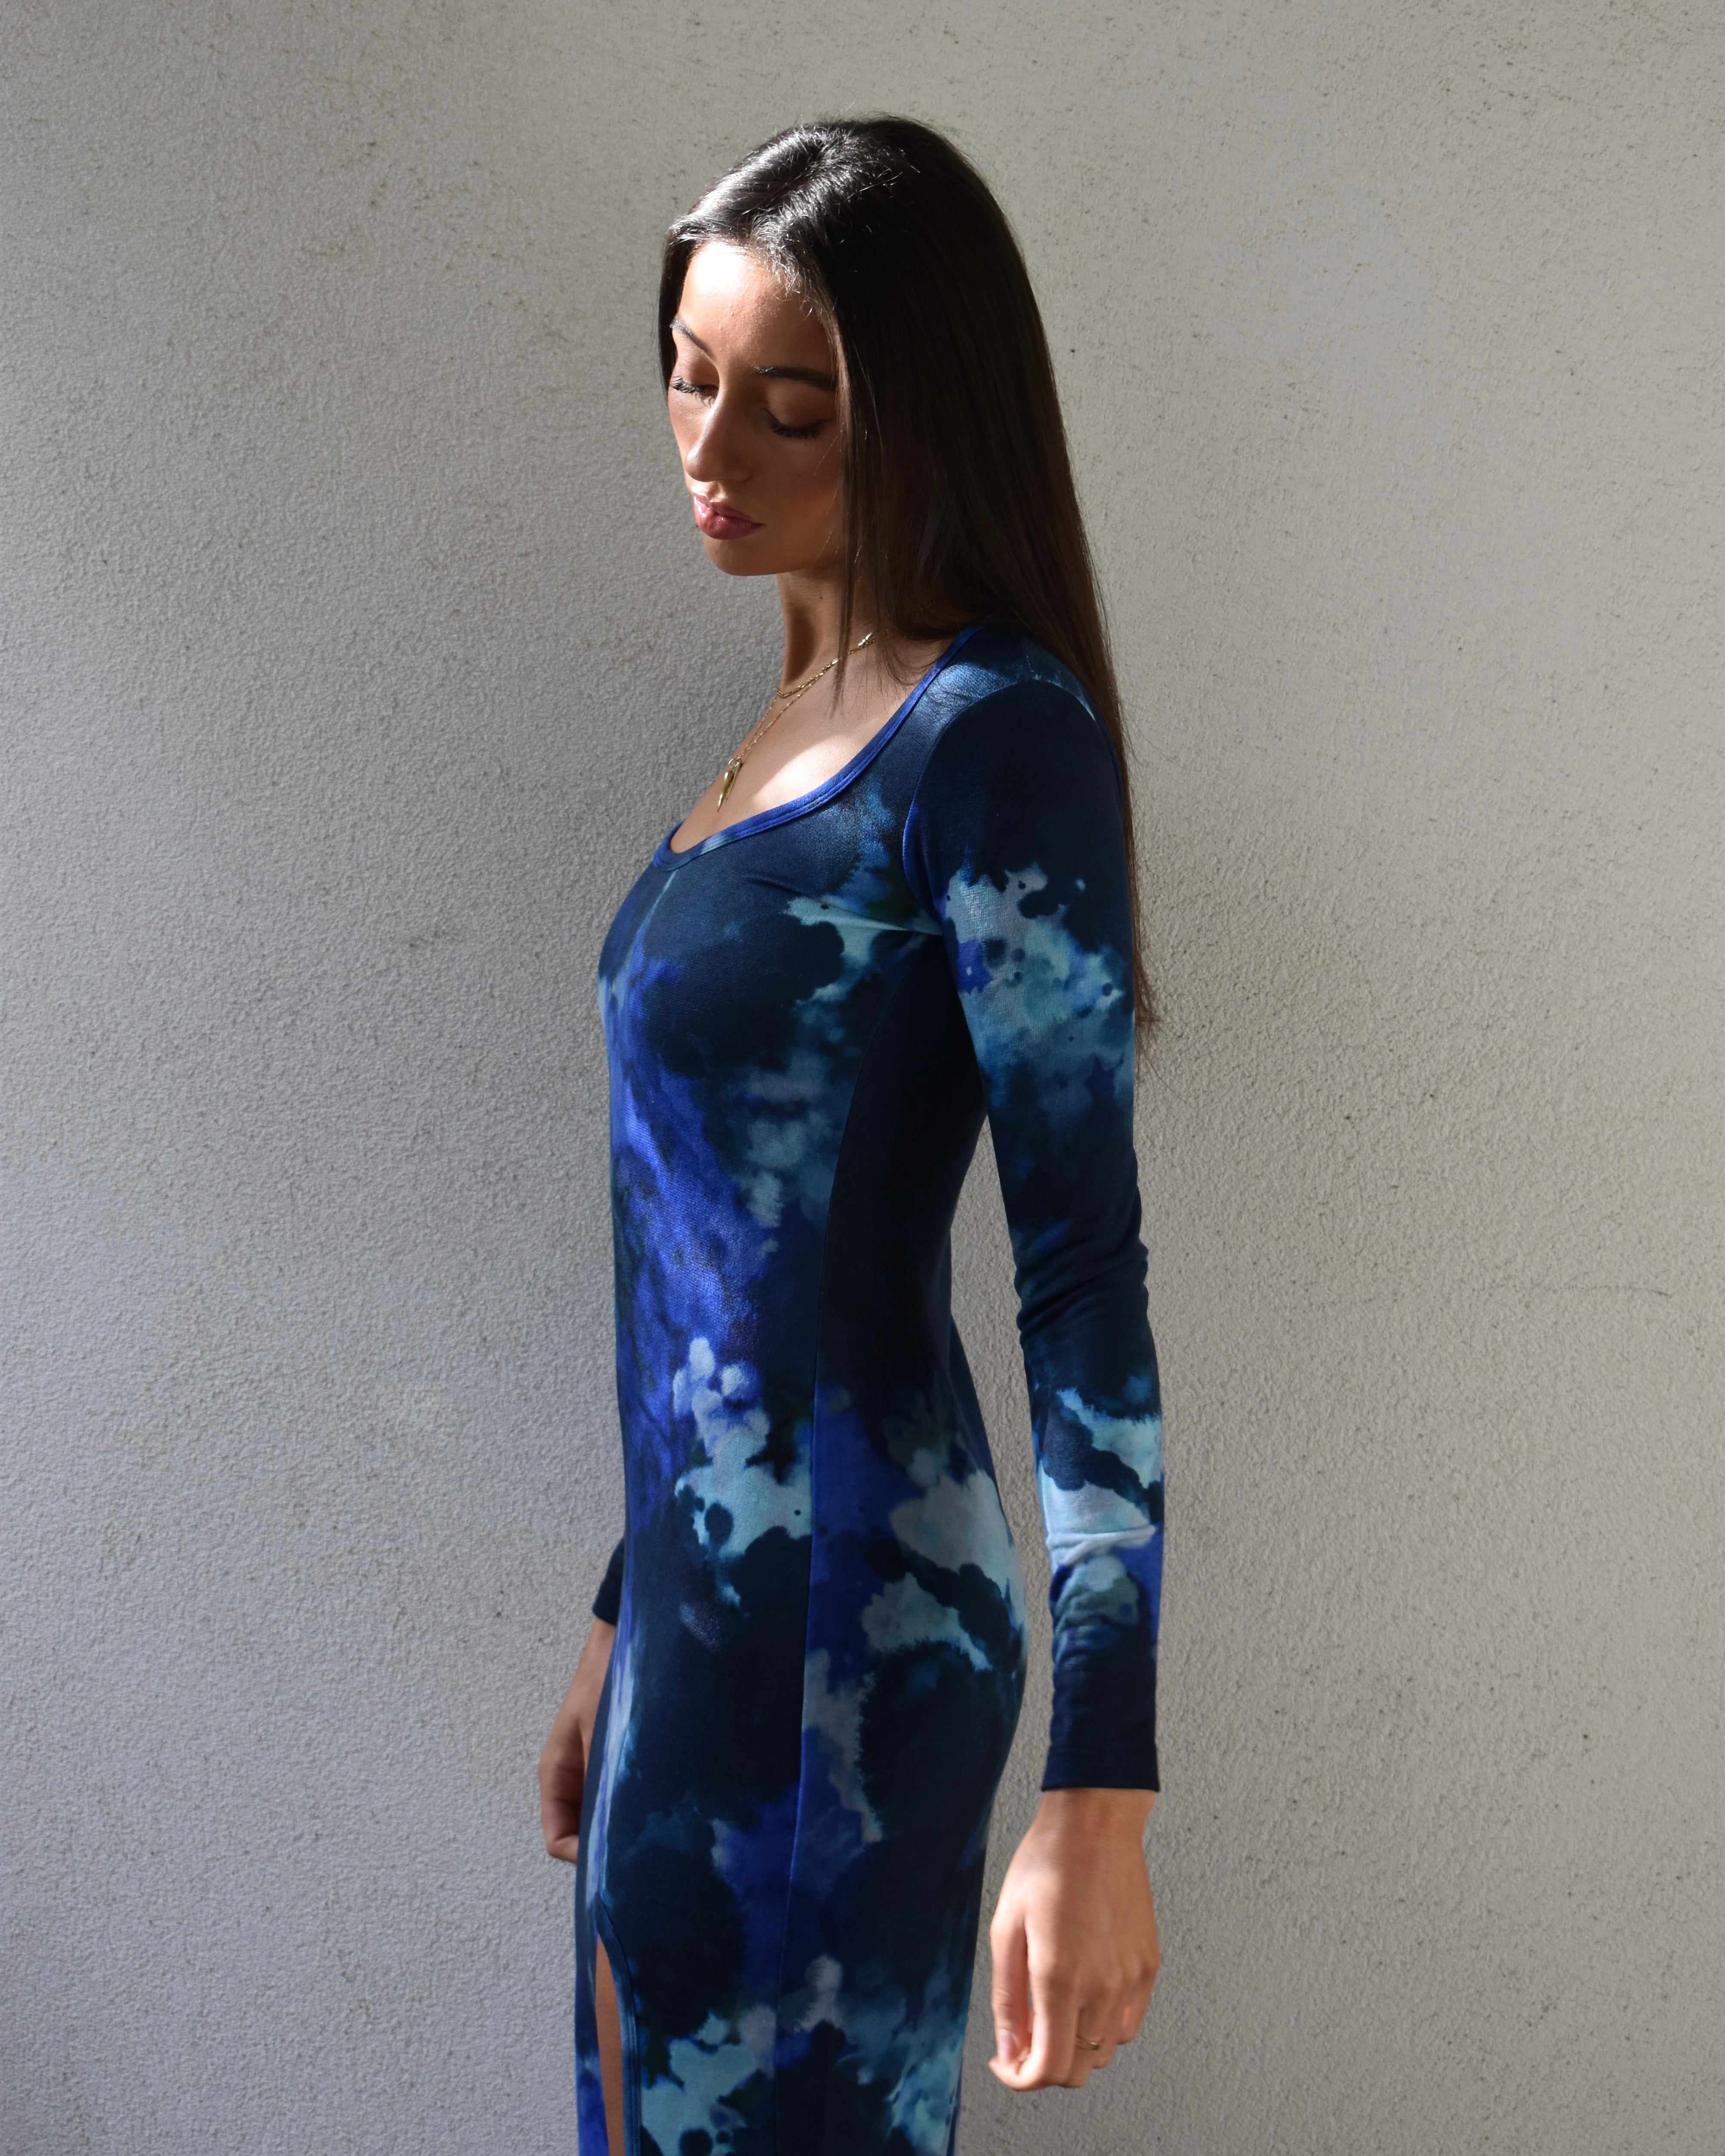 The Blue Lagoon Dress